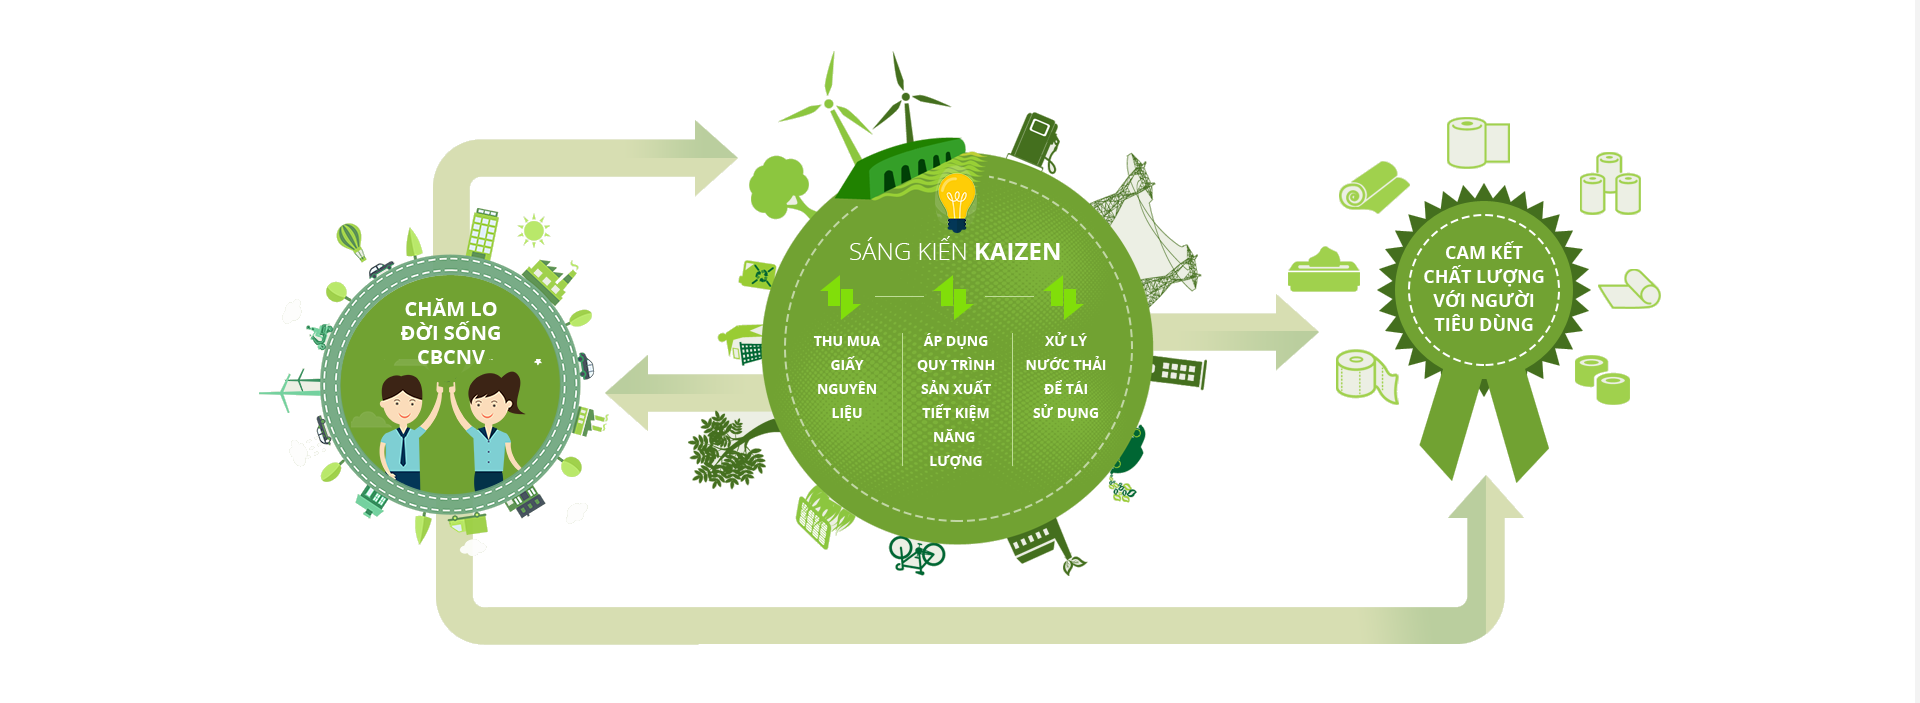 Saigon Paper and sustainable development goal